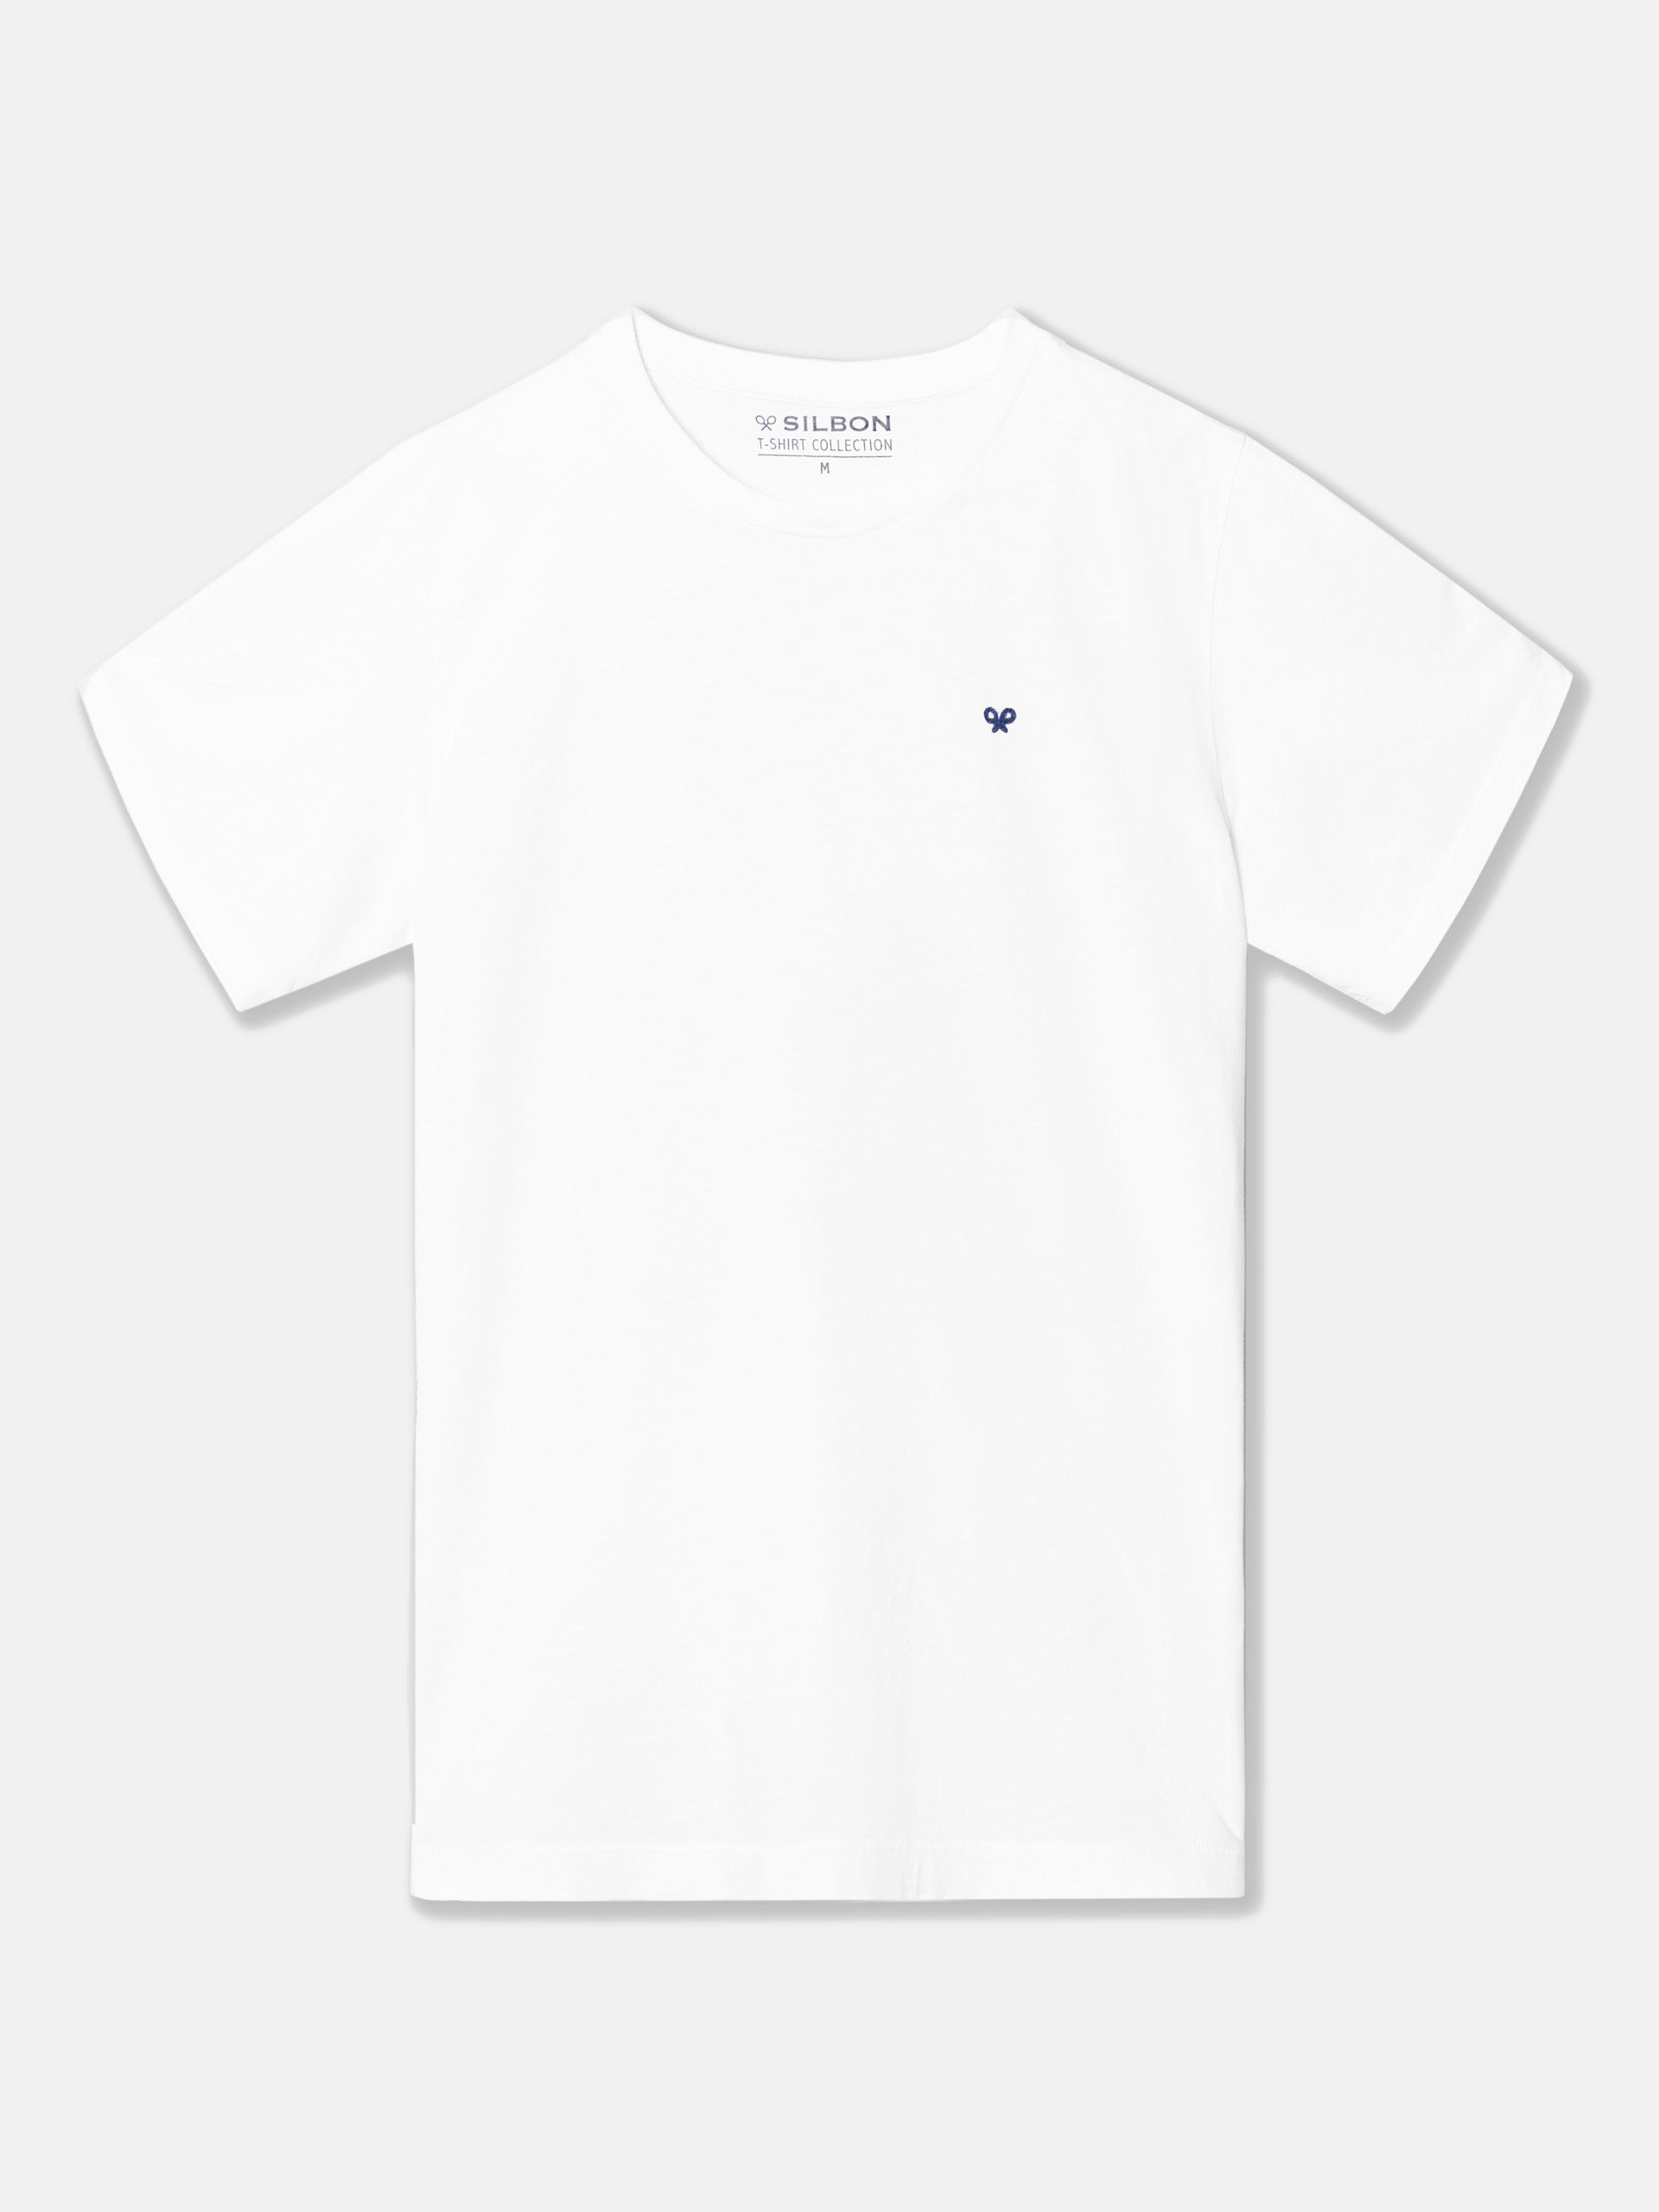 Camiseta silbon vibes blanca